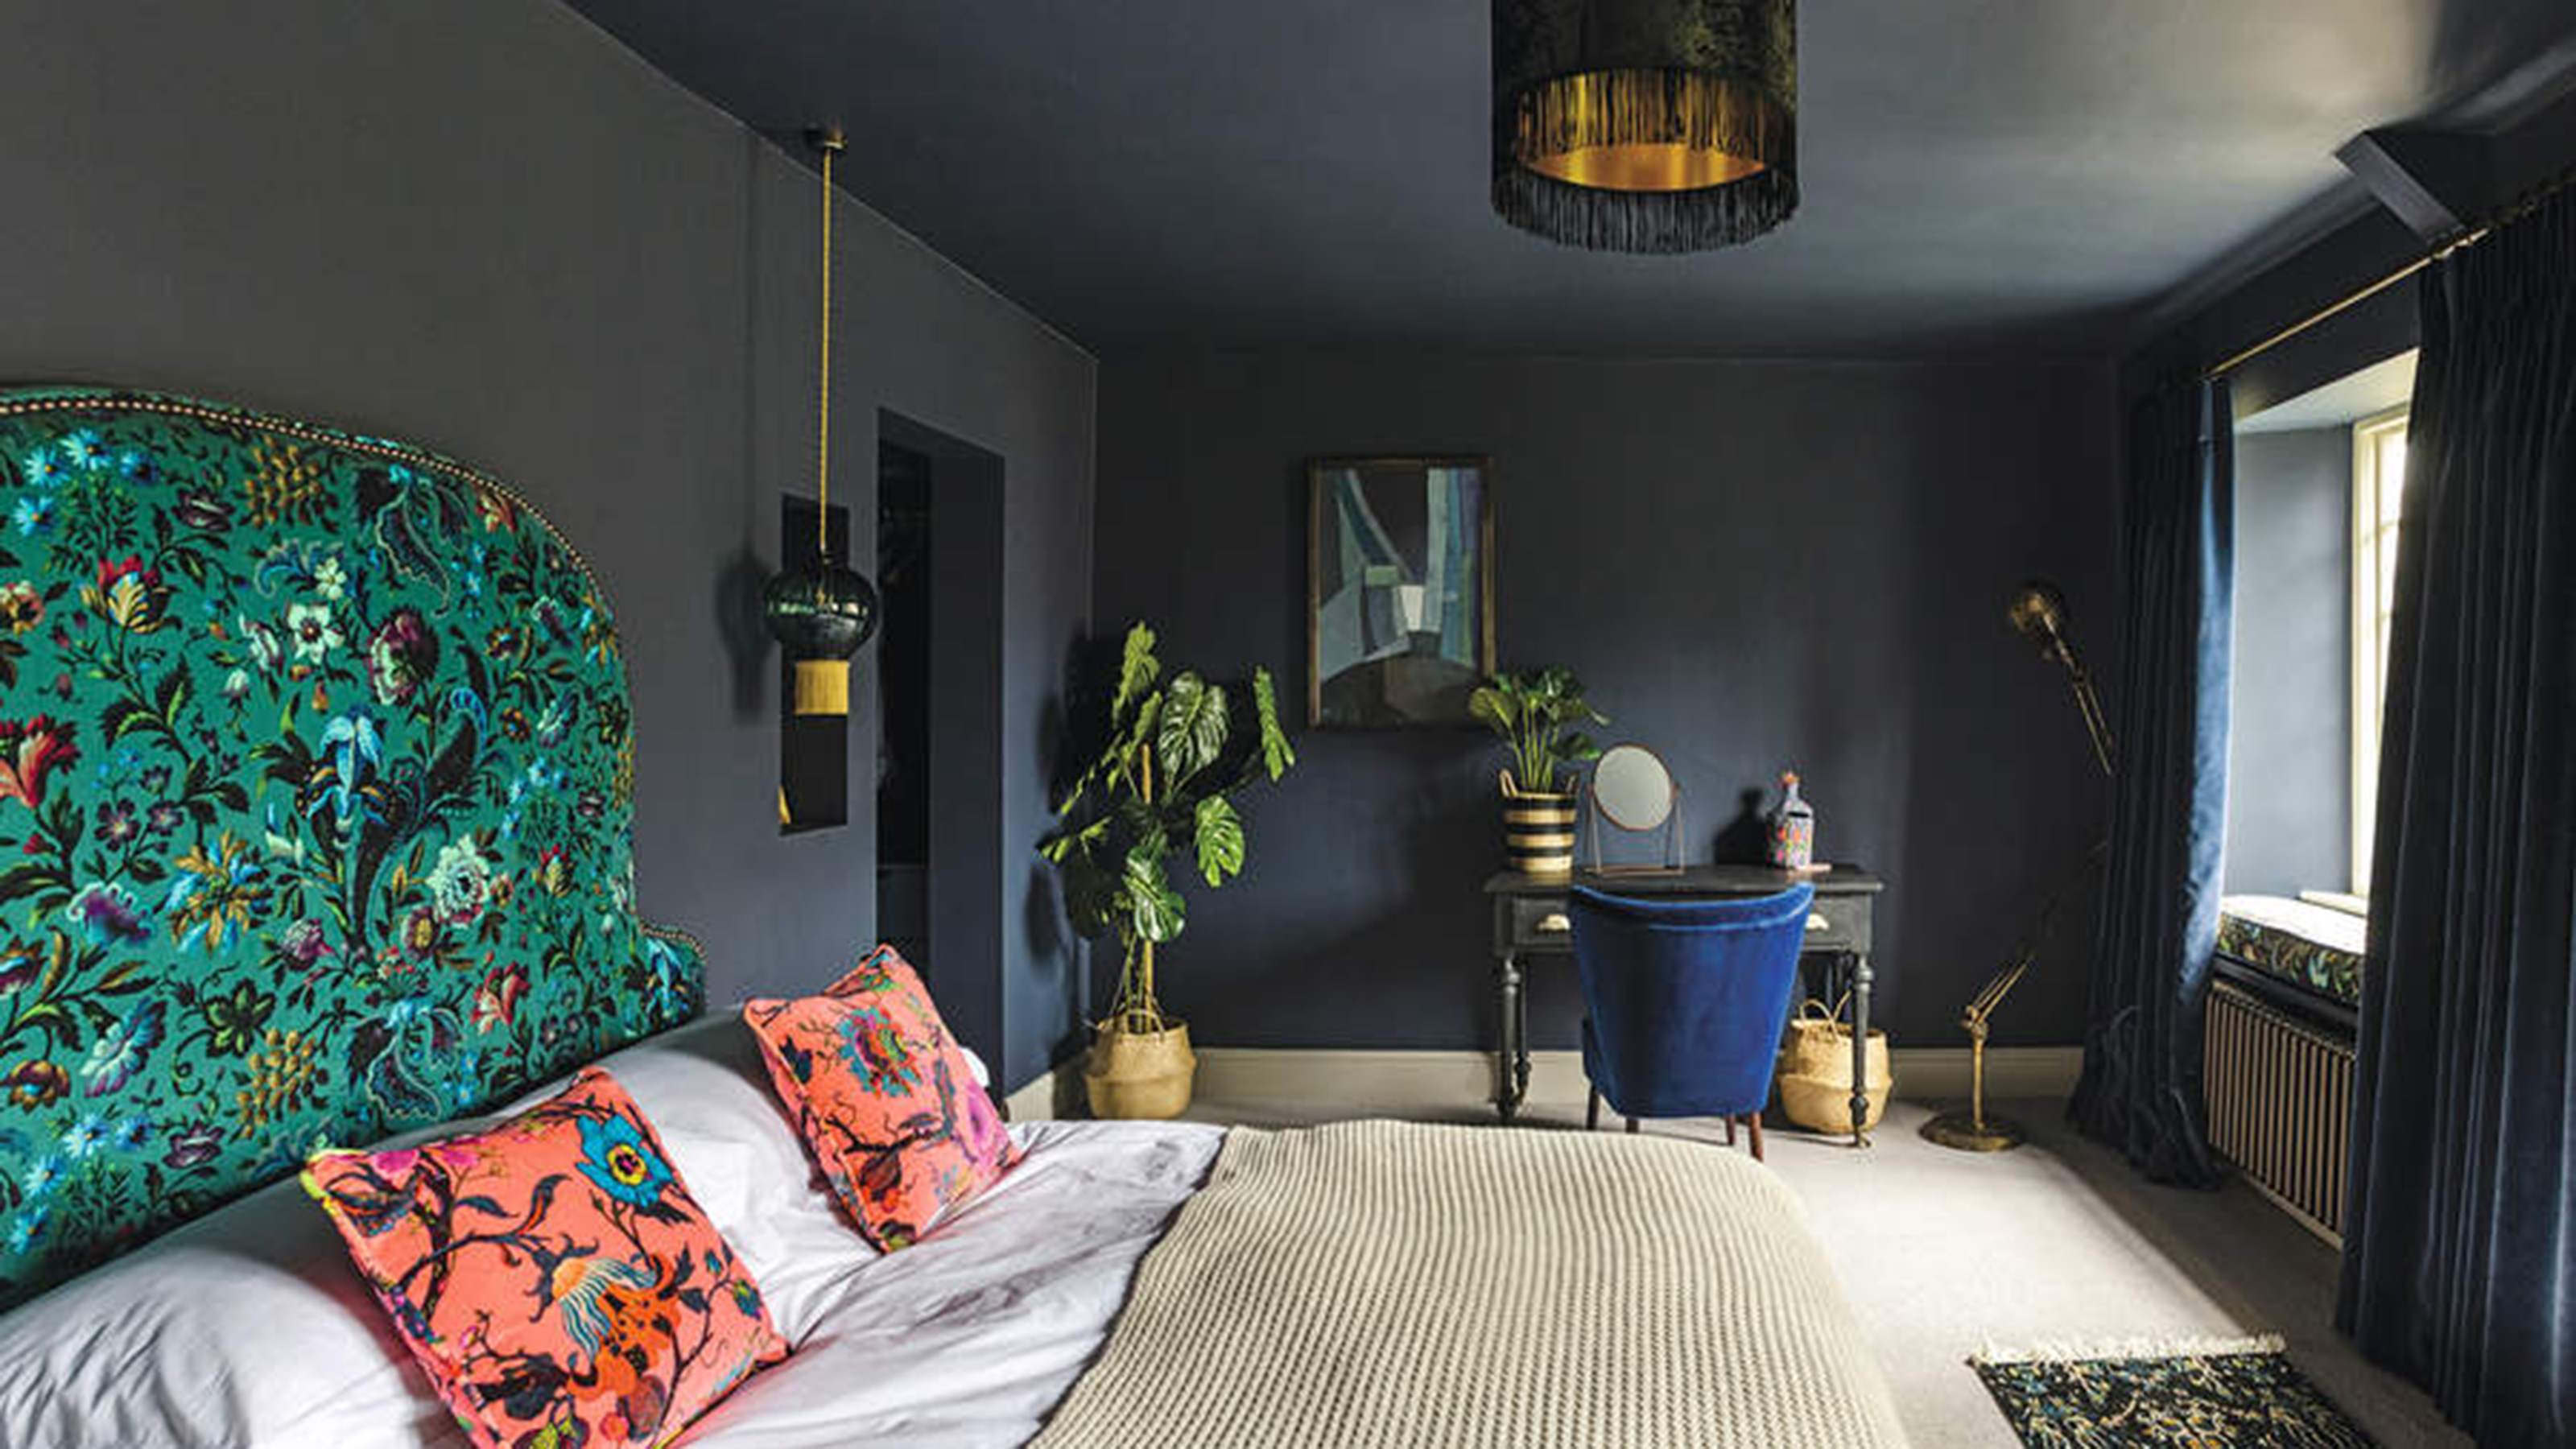 Bedroom Wall Designs: More Than Just Paint - Bonito Designs